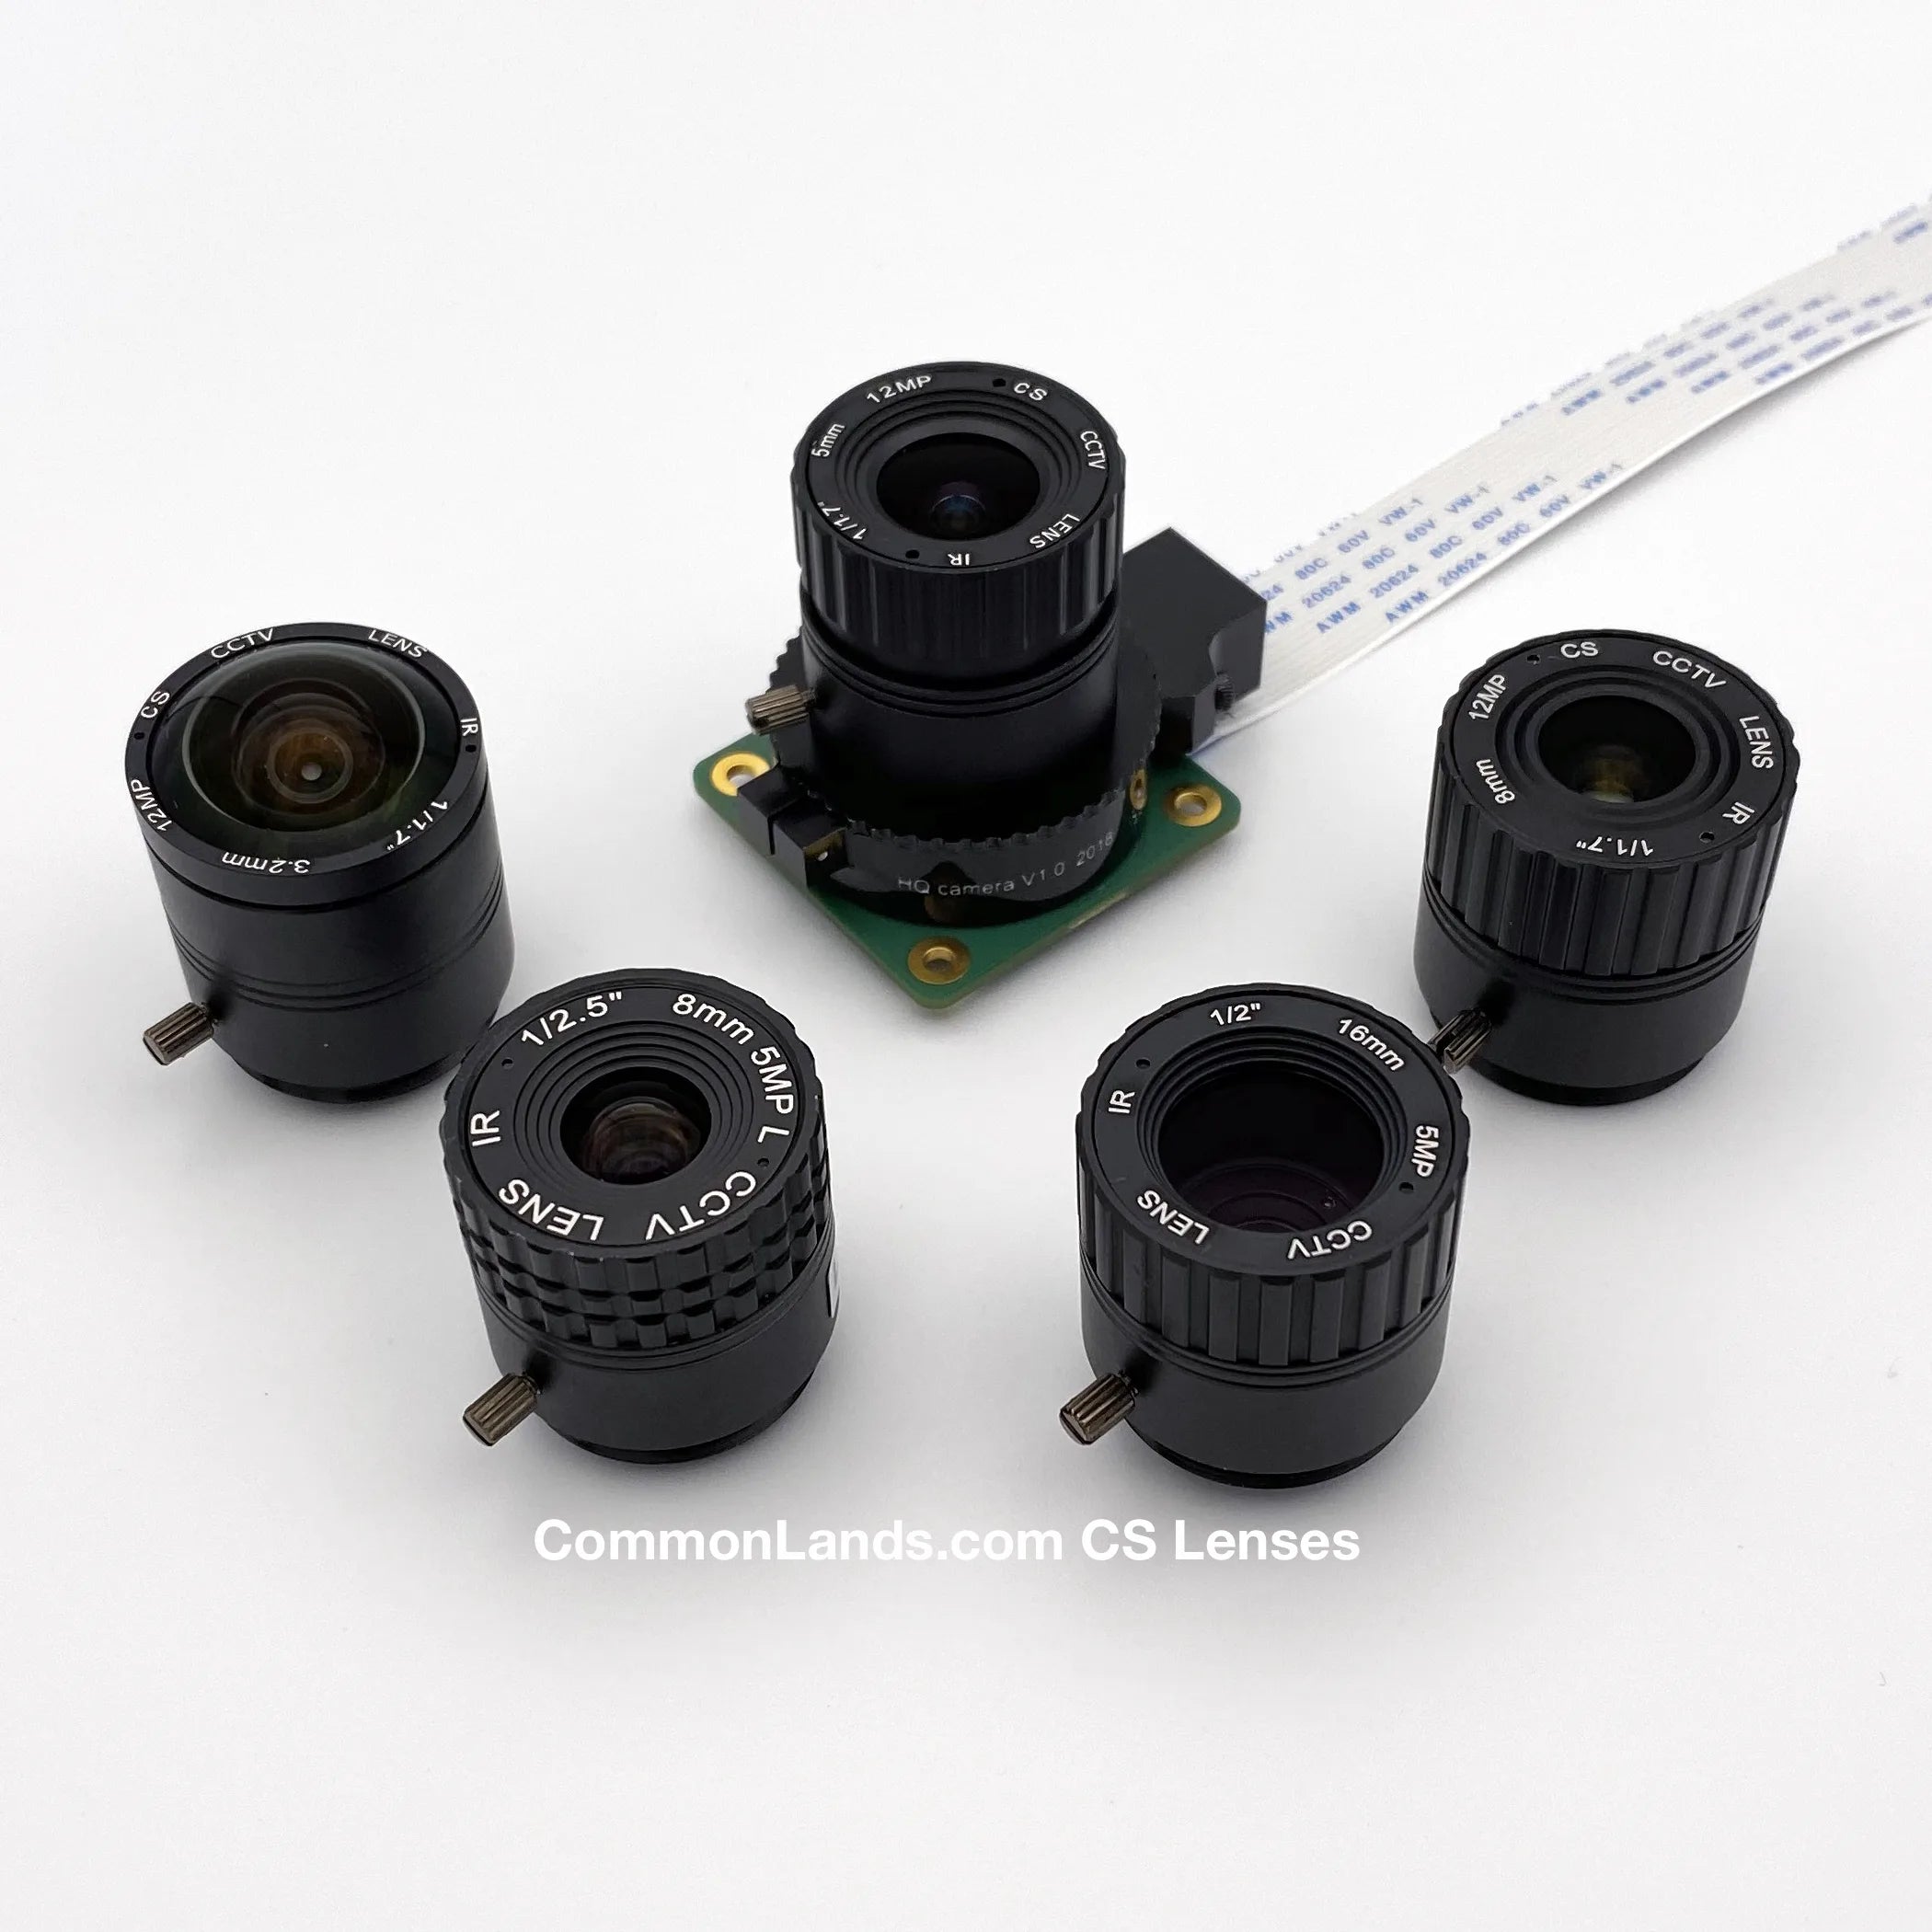 CS Mount lenses for the Raspberry Pi High Quality Camera and High Resolution Surveillance Lenses.